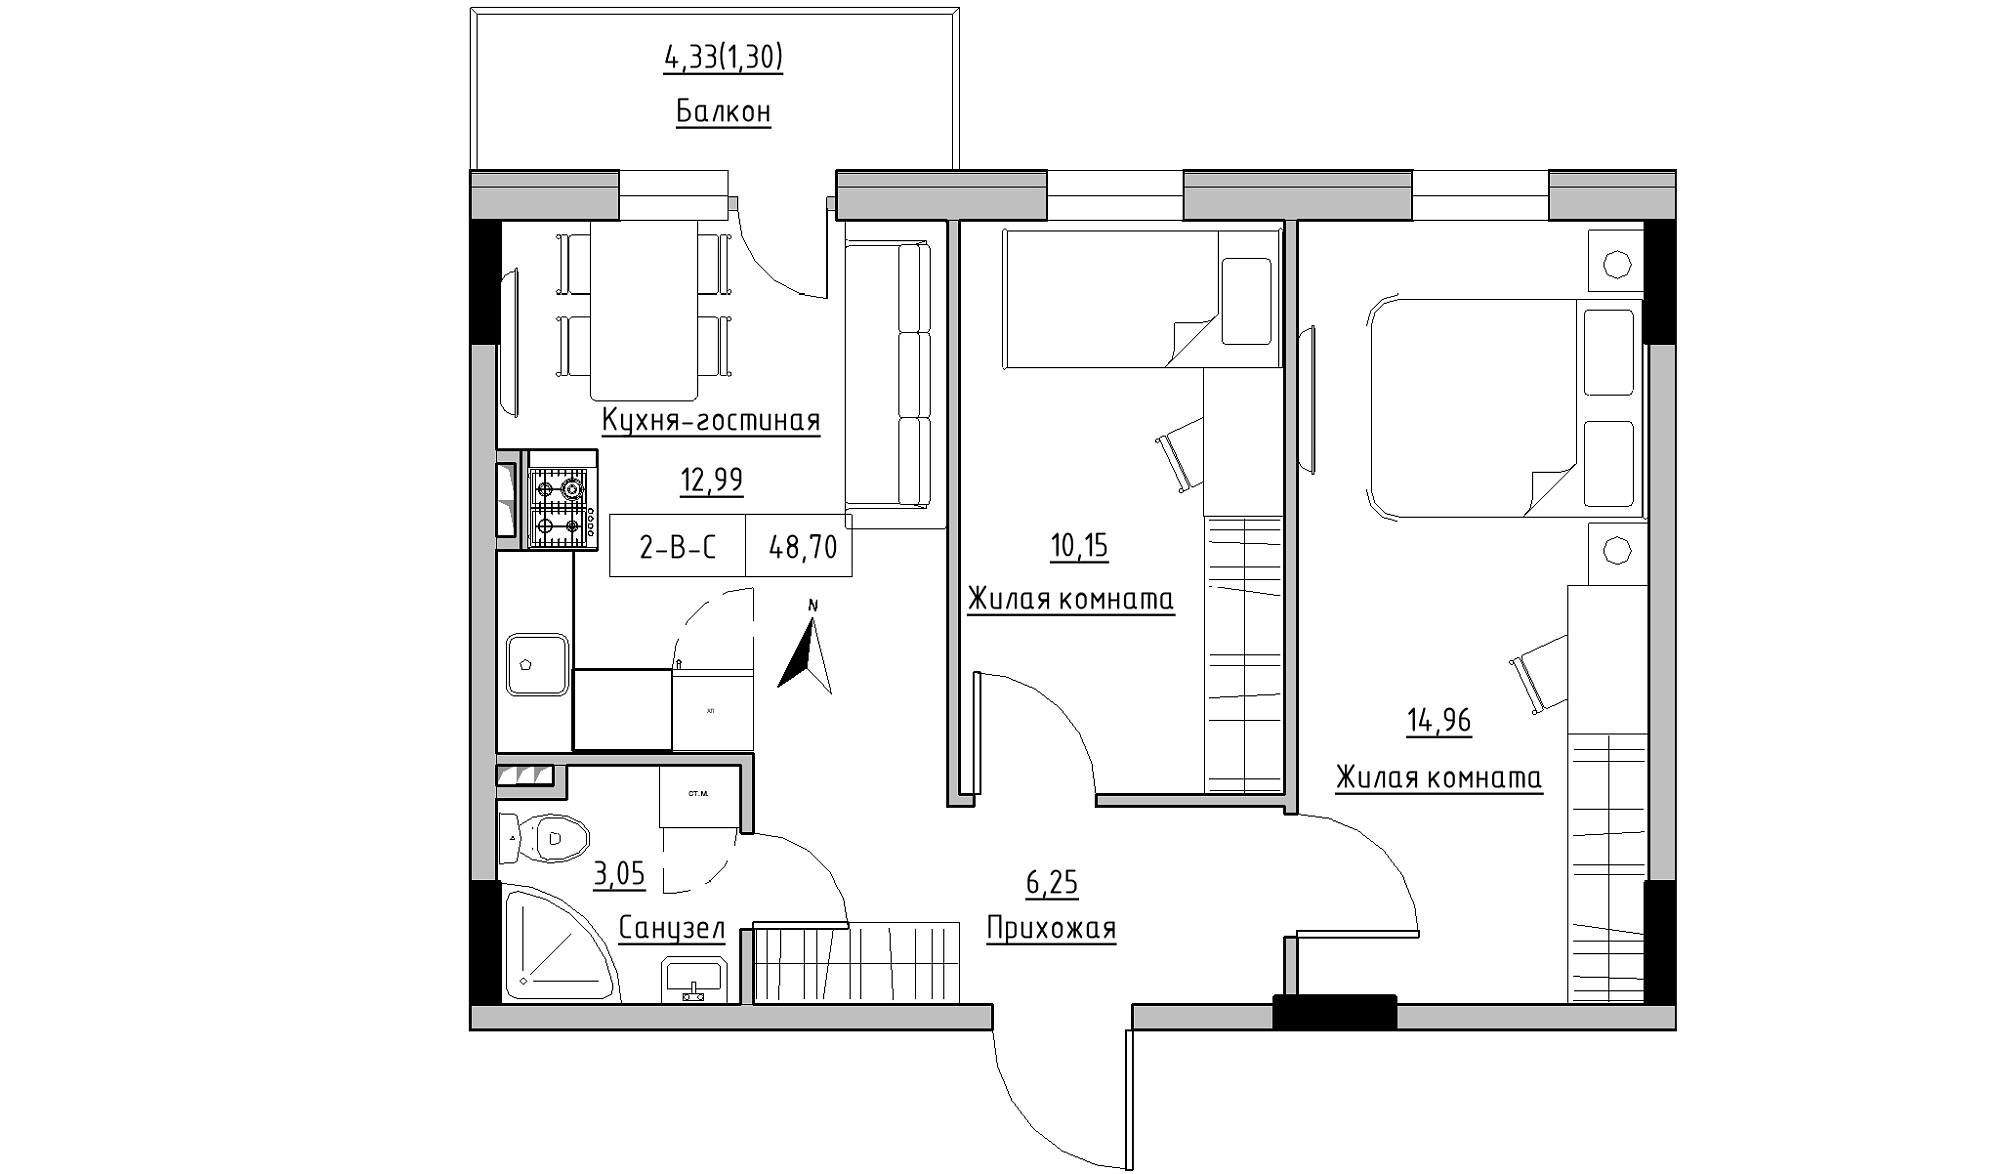 Planning 2-rm flats area 48.7m2, KS-025-02/0009.